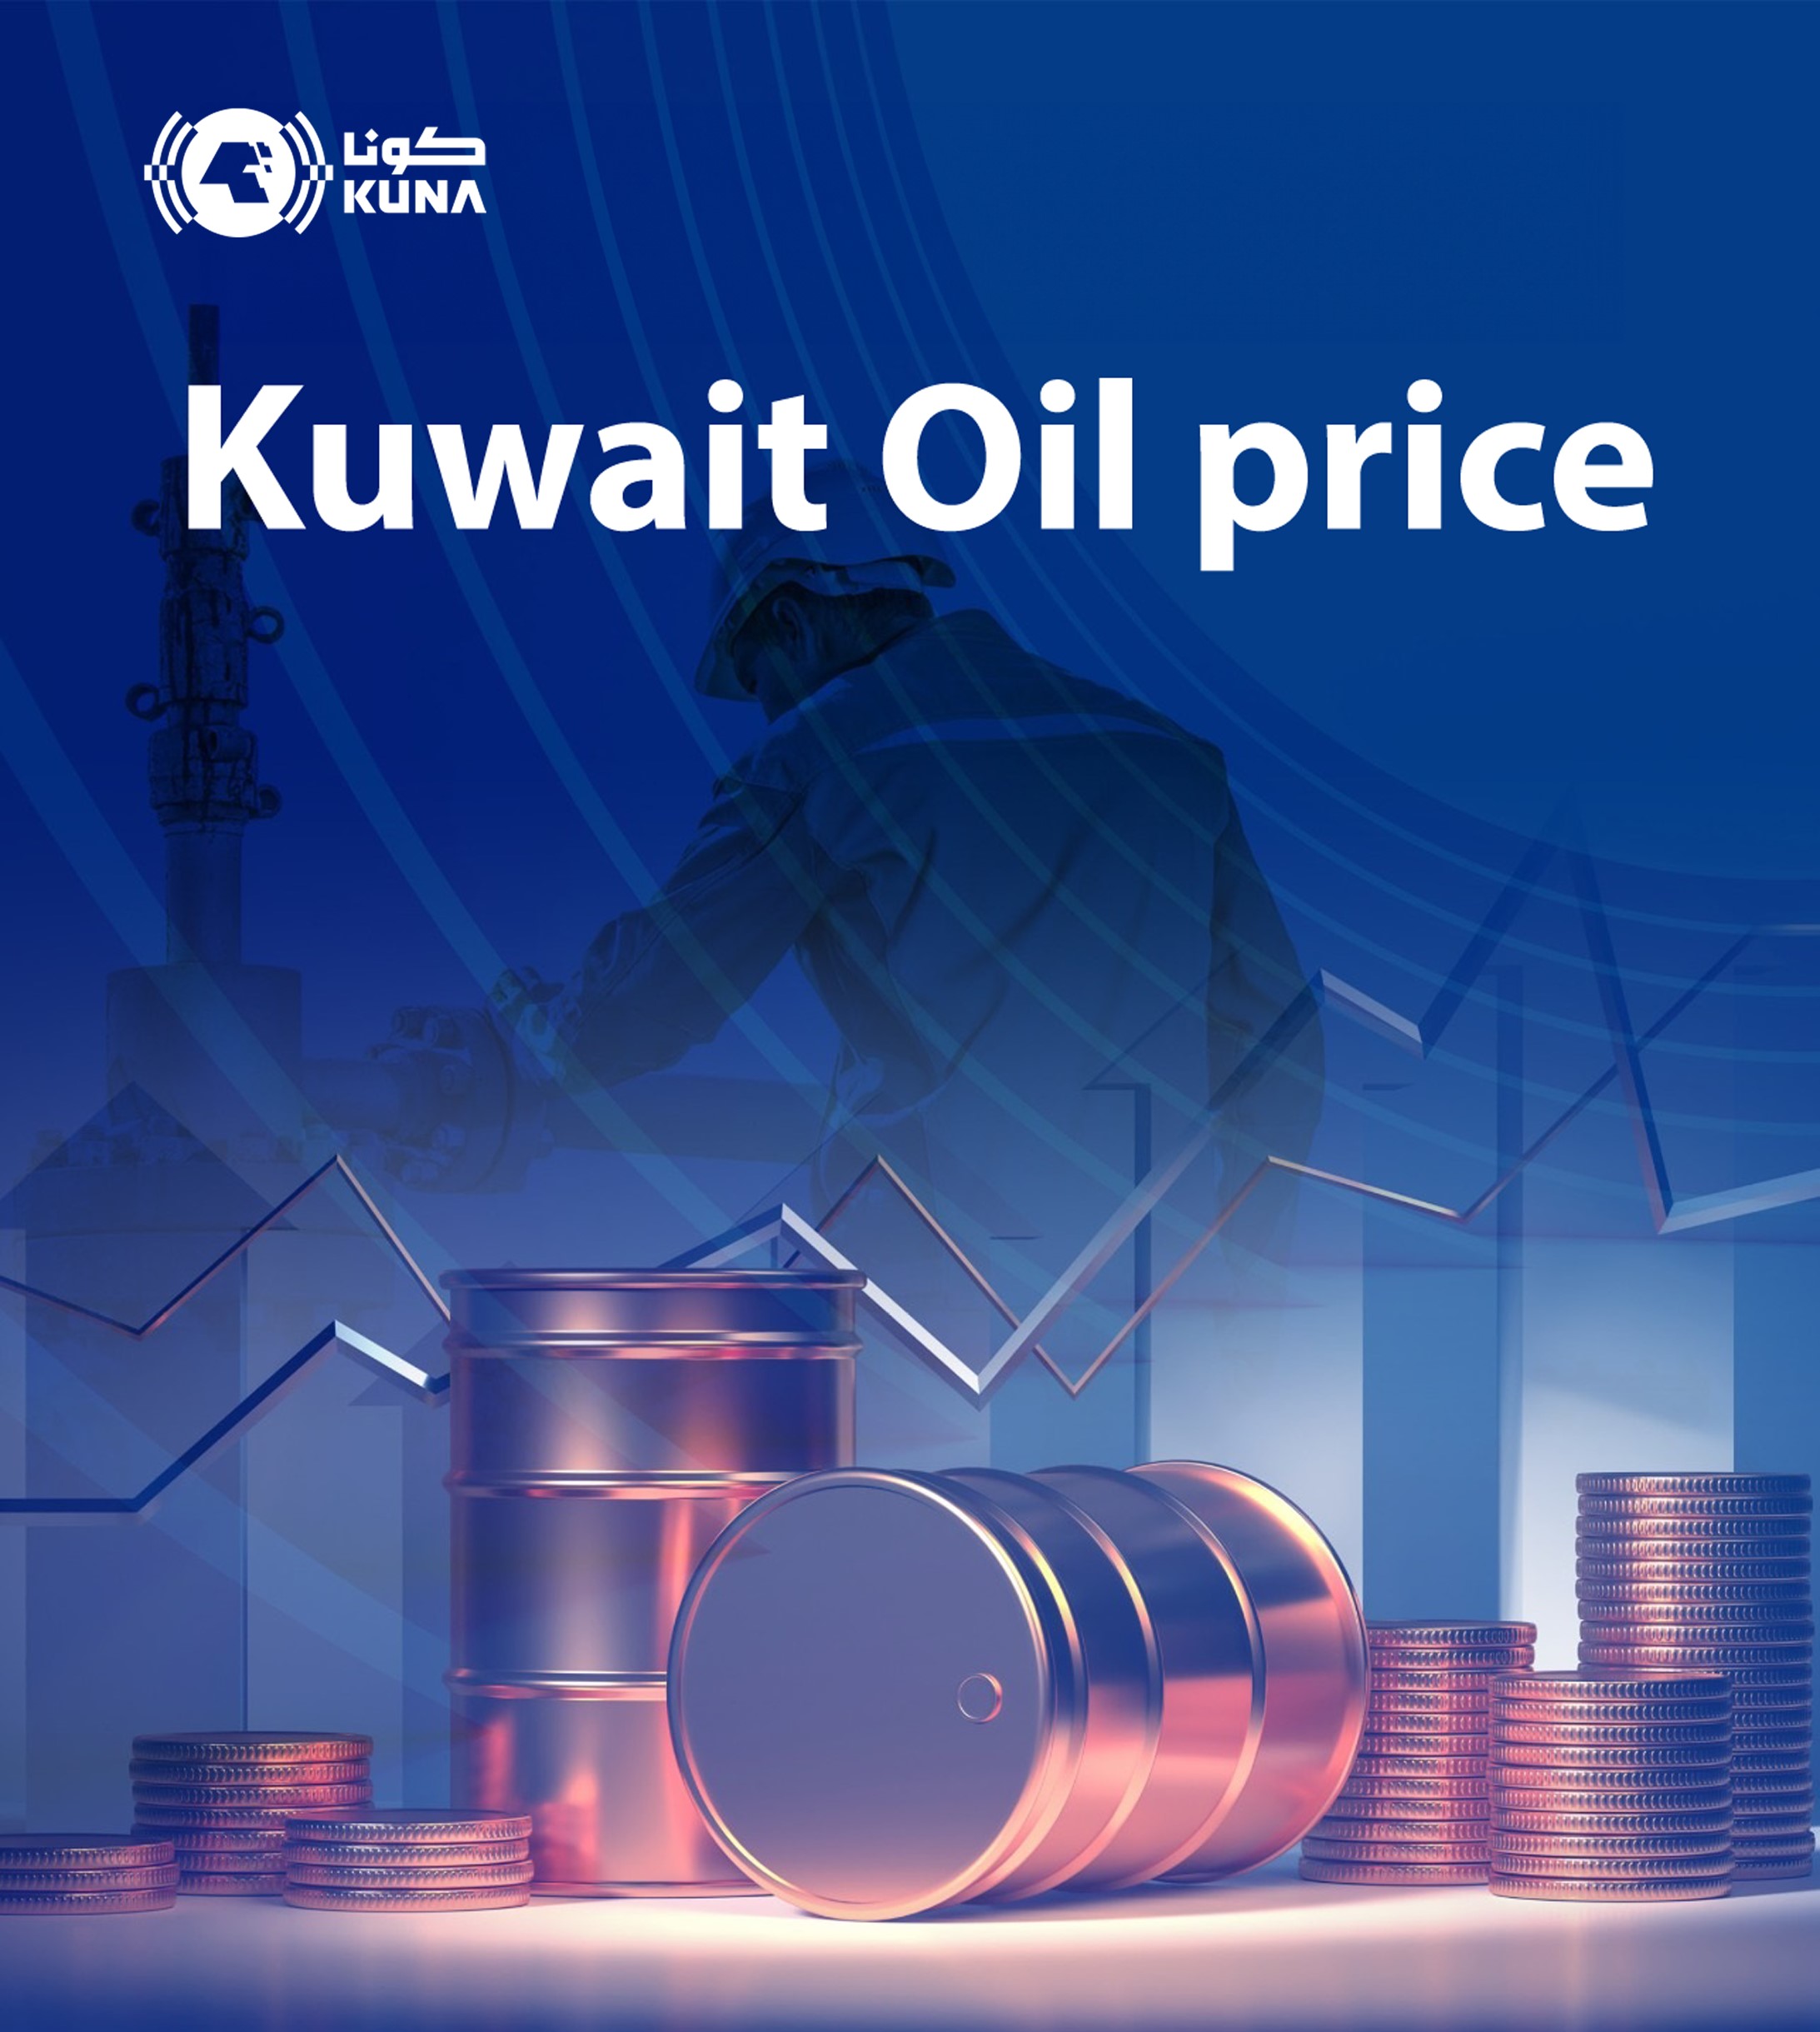 Kuwaiti oil price up 45 cents to USD 90.00 pb                                                                                                                                                                                                             